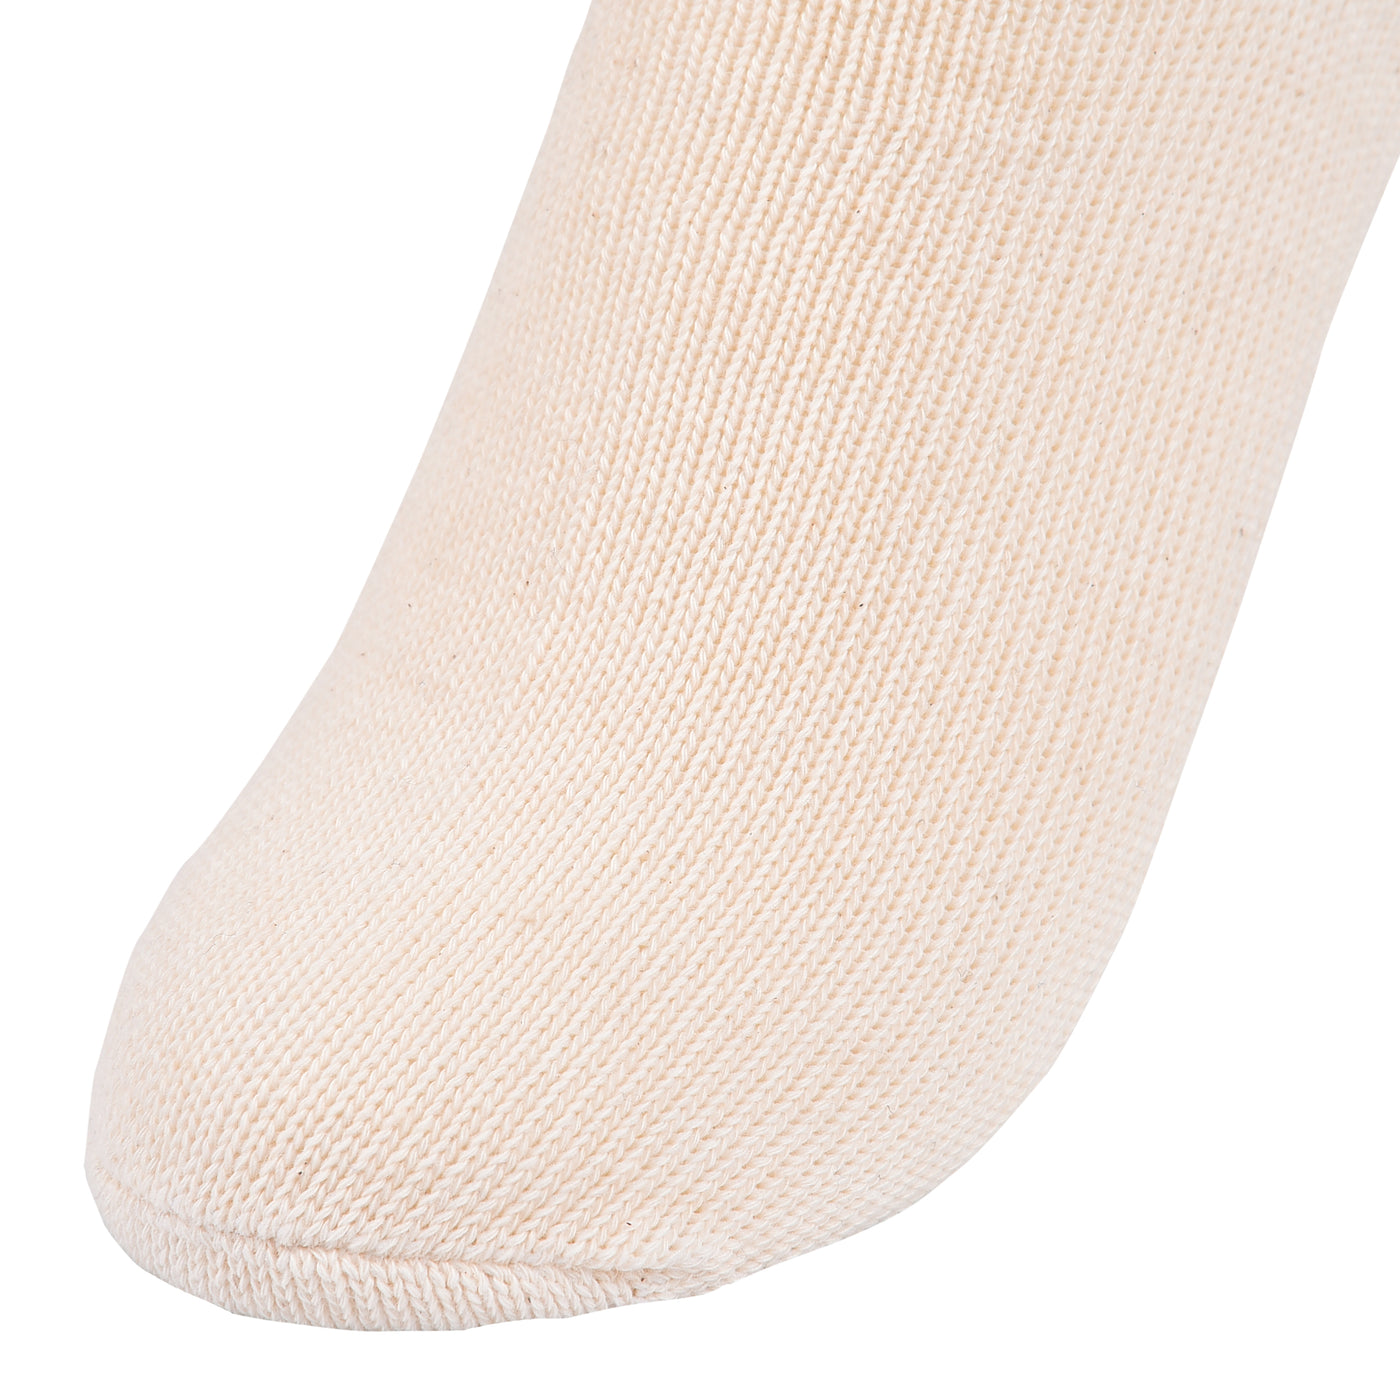 Laulax 3 Pairs Womens Loose Top Gentle Grip Diabetic Cotton Socks,  Size UK 4-7 / Europe 36-41, 2 Design